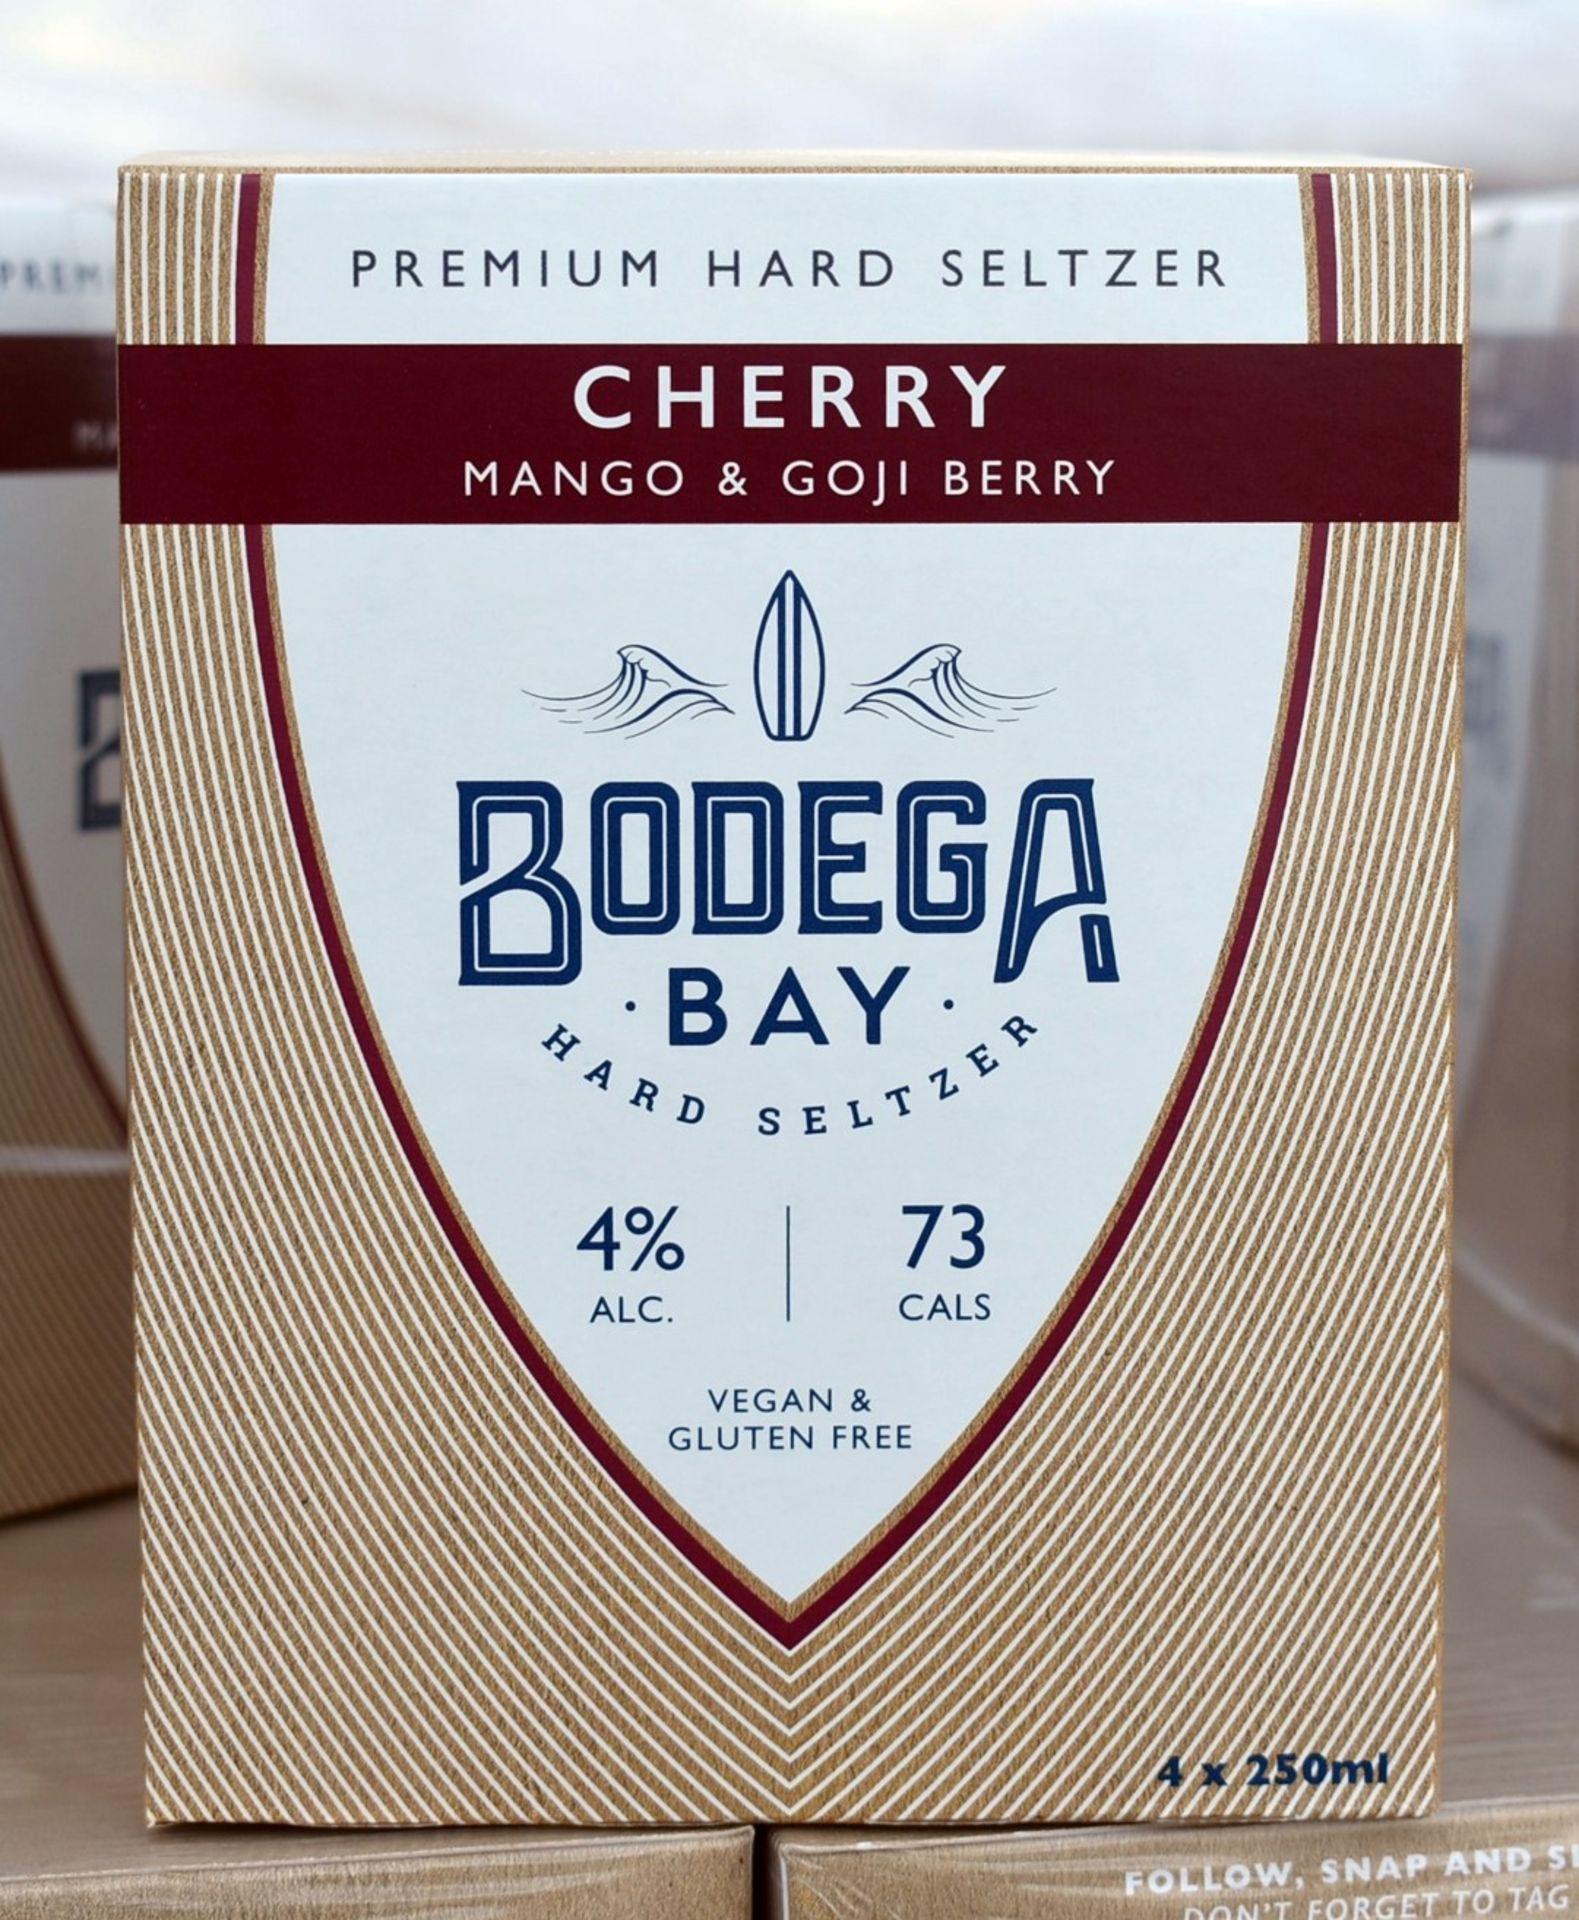 24 x Bodega Bay Hard Seltzer 250ml Alcoholic Sparkling Water Drinks - Cherry Mango & Goji Berry - 4% - Image 2 of 7